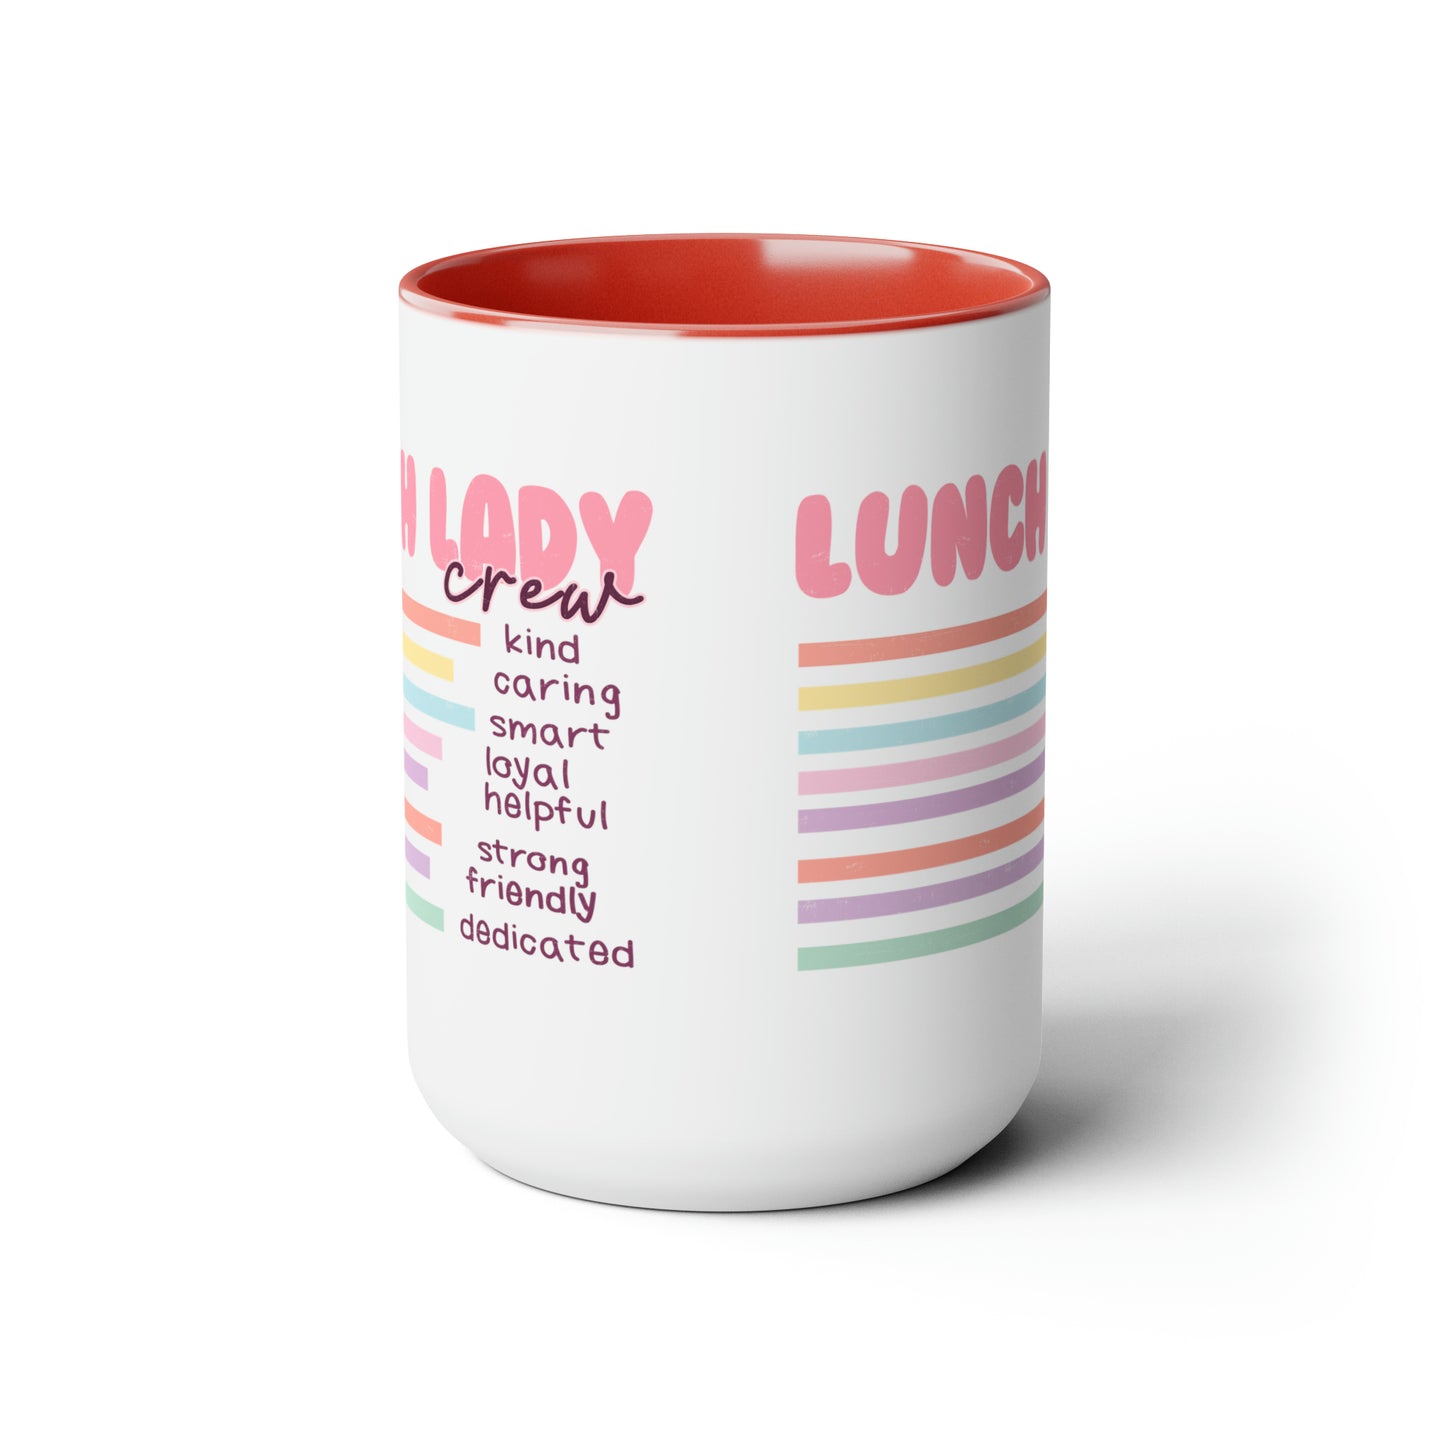 Lunch Lady Two-Tone Coffee Mug, 15oz Printify Pikolelie (pee-koh-lay-lee) Activewear Mug